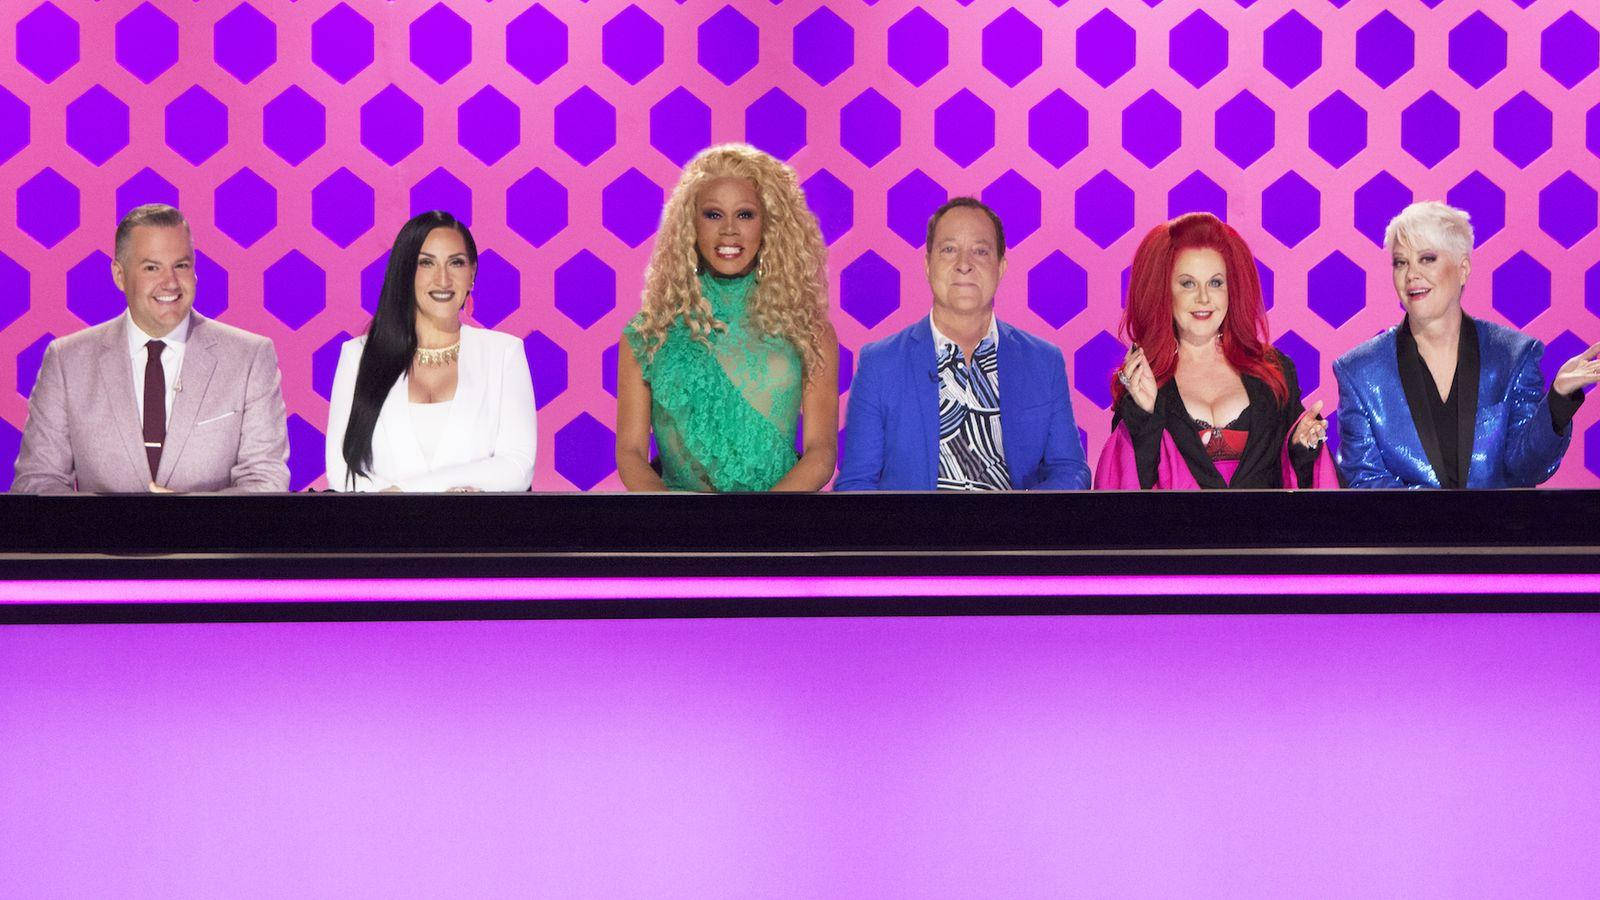 Ensemble of Contestants from RuPaul's Drag Race Season 9 Wallpaper